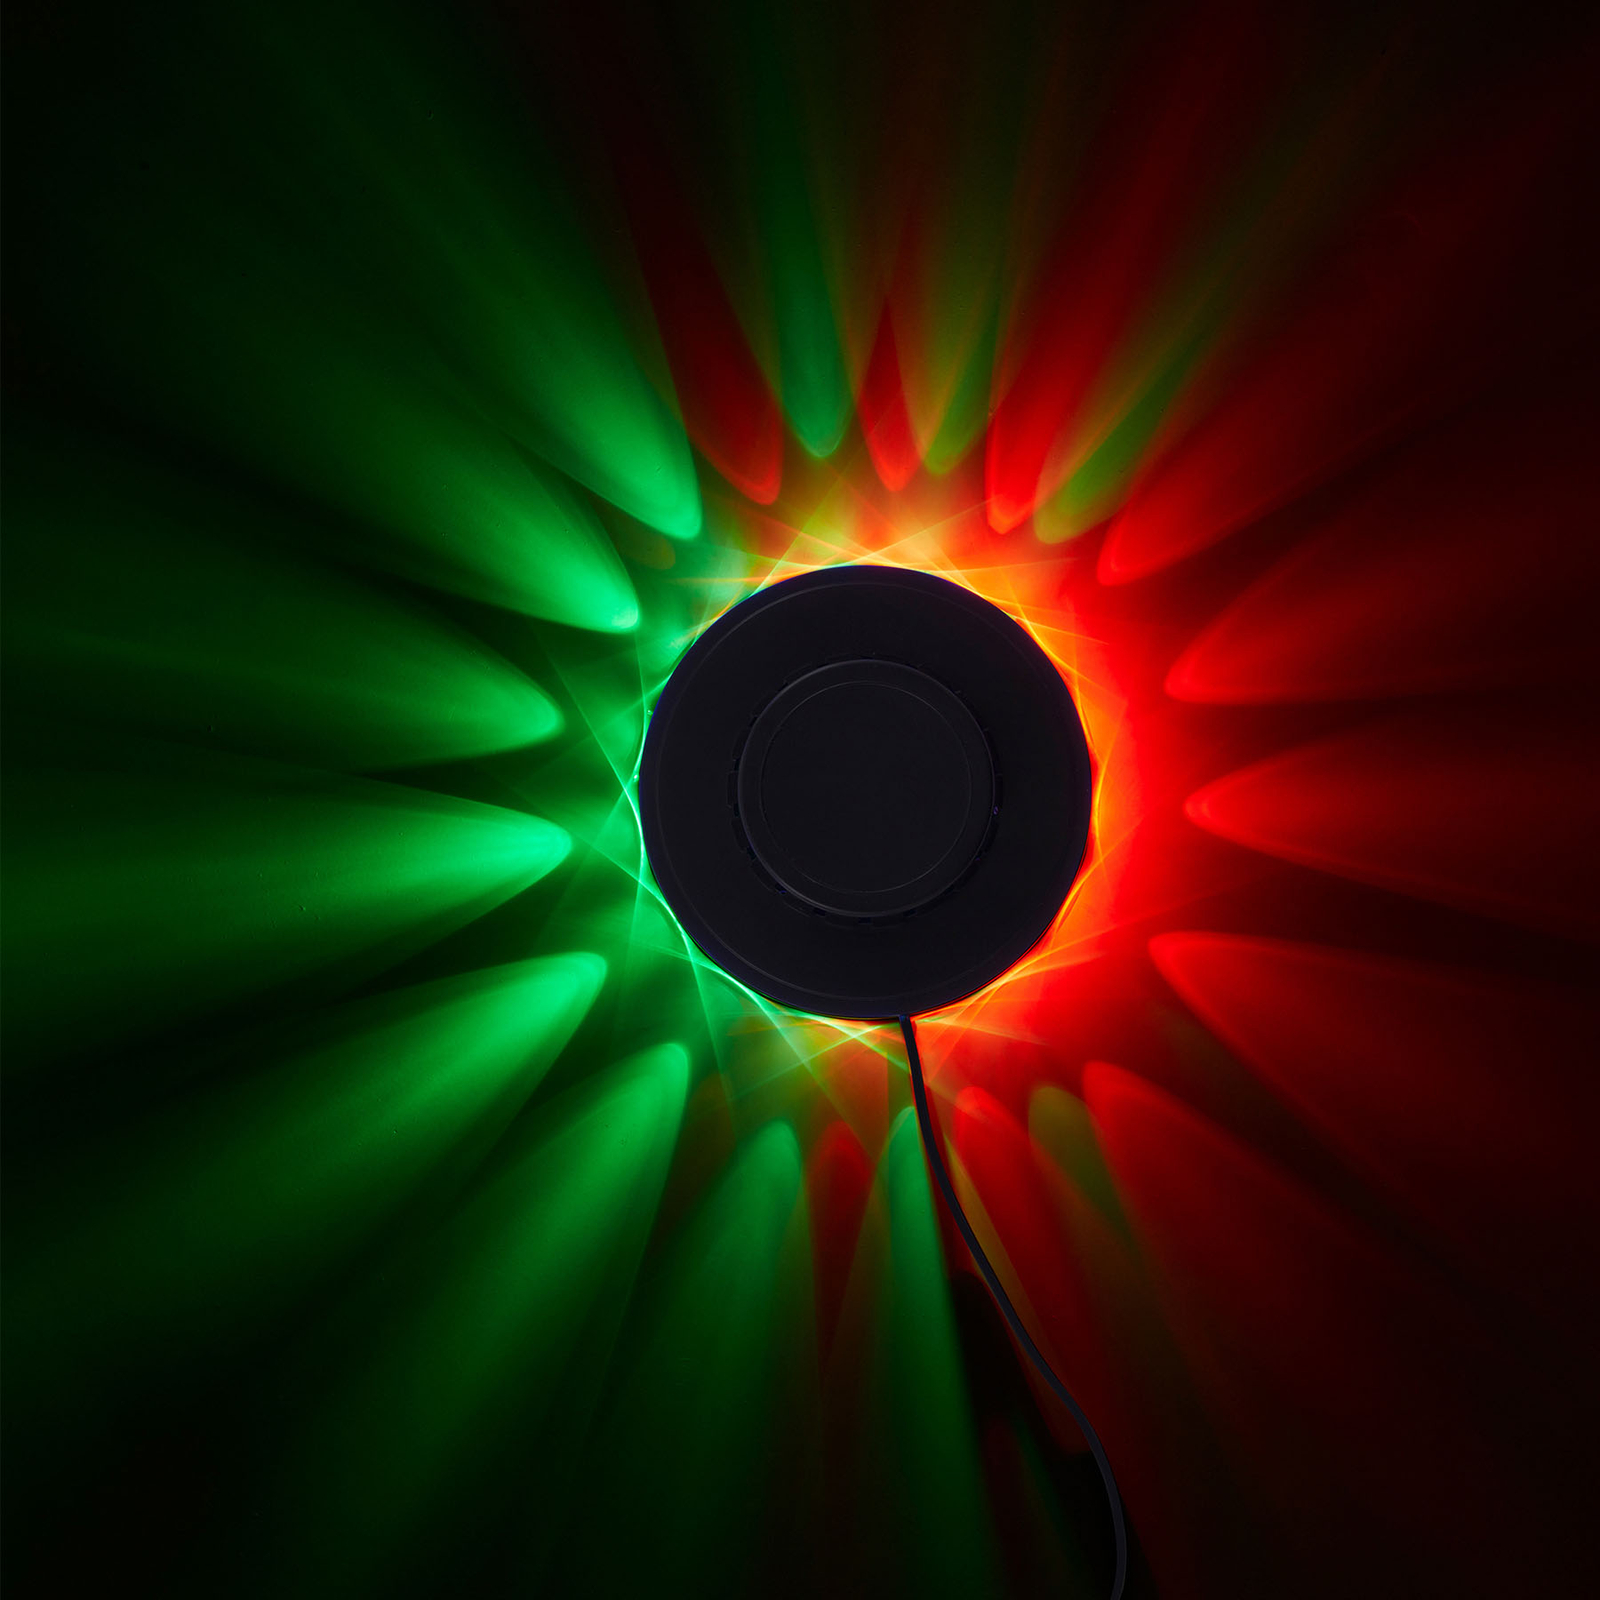 RGB LED decorative light - decorative light with music sensor